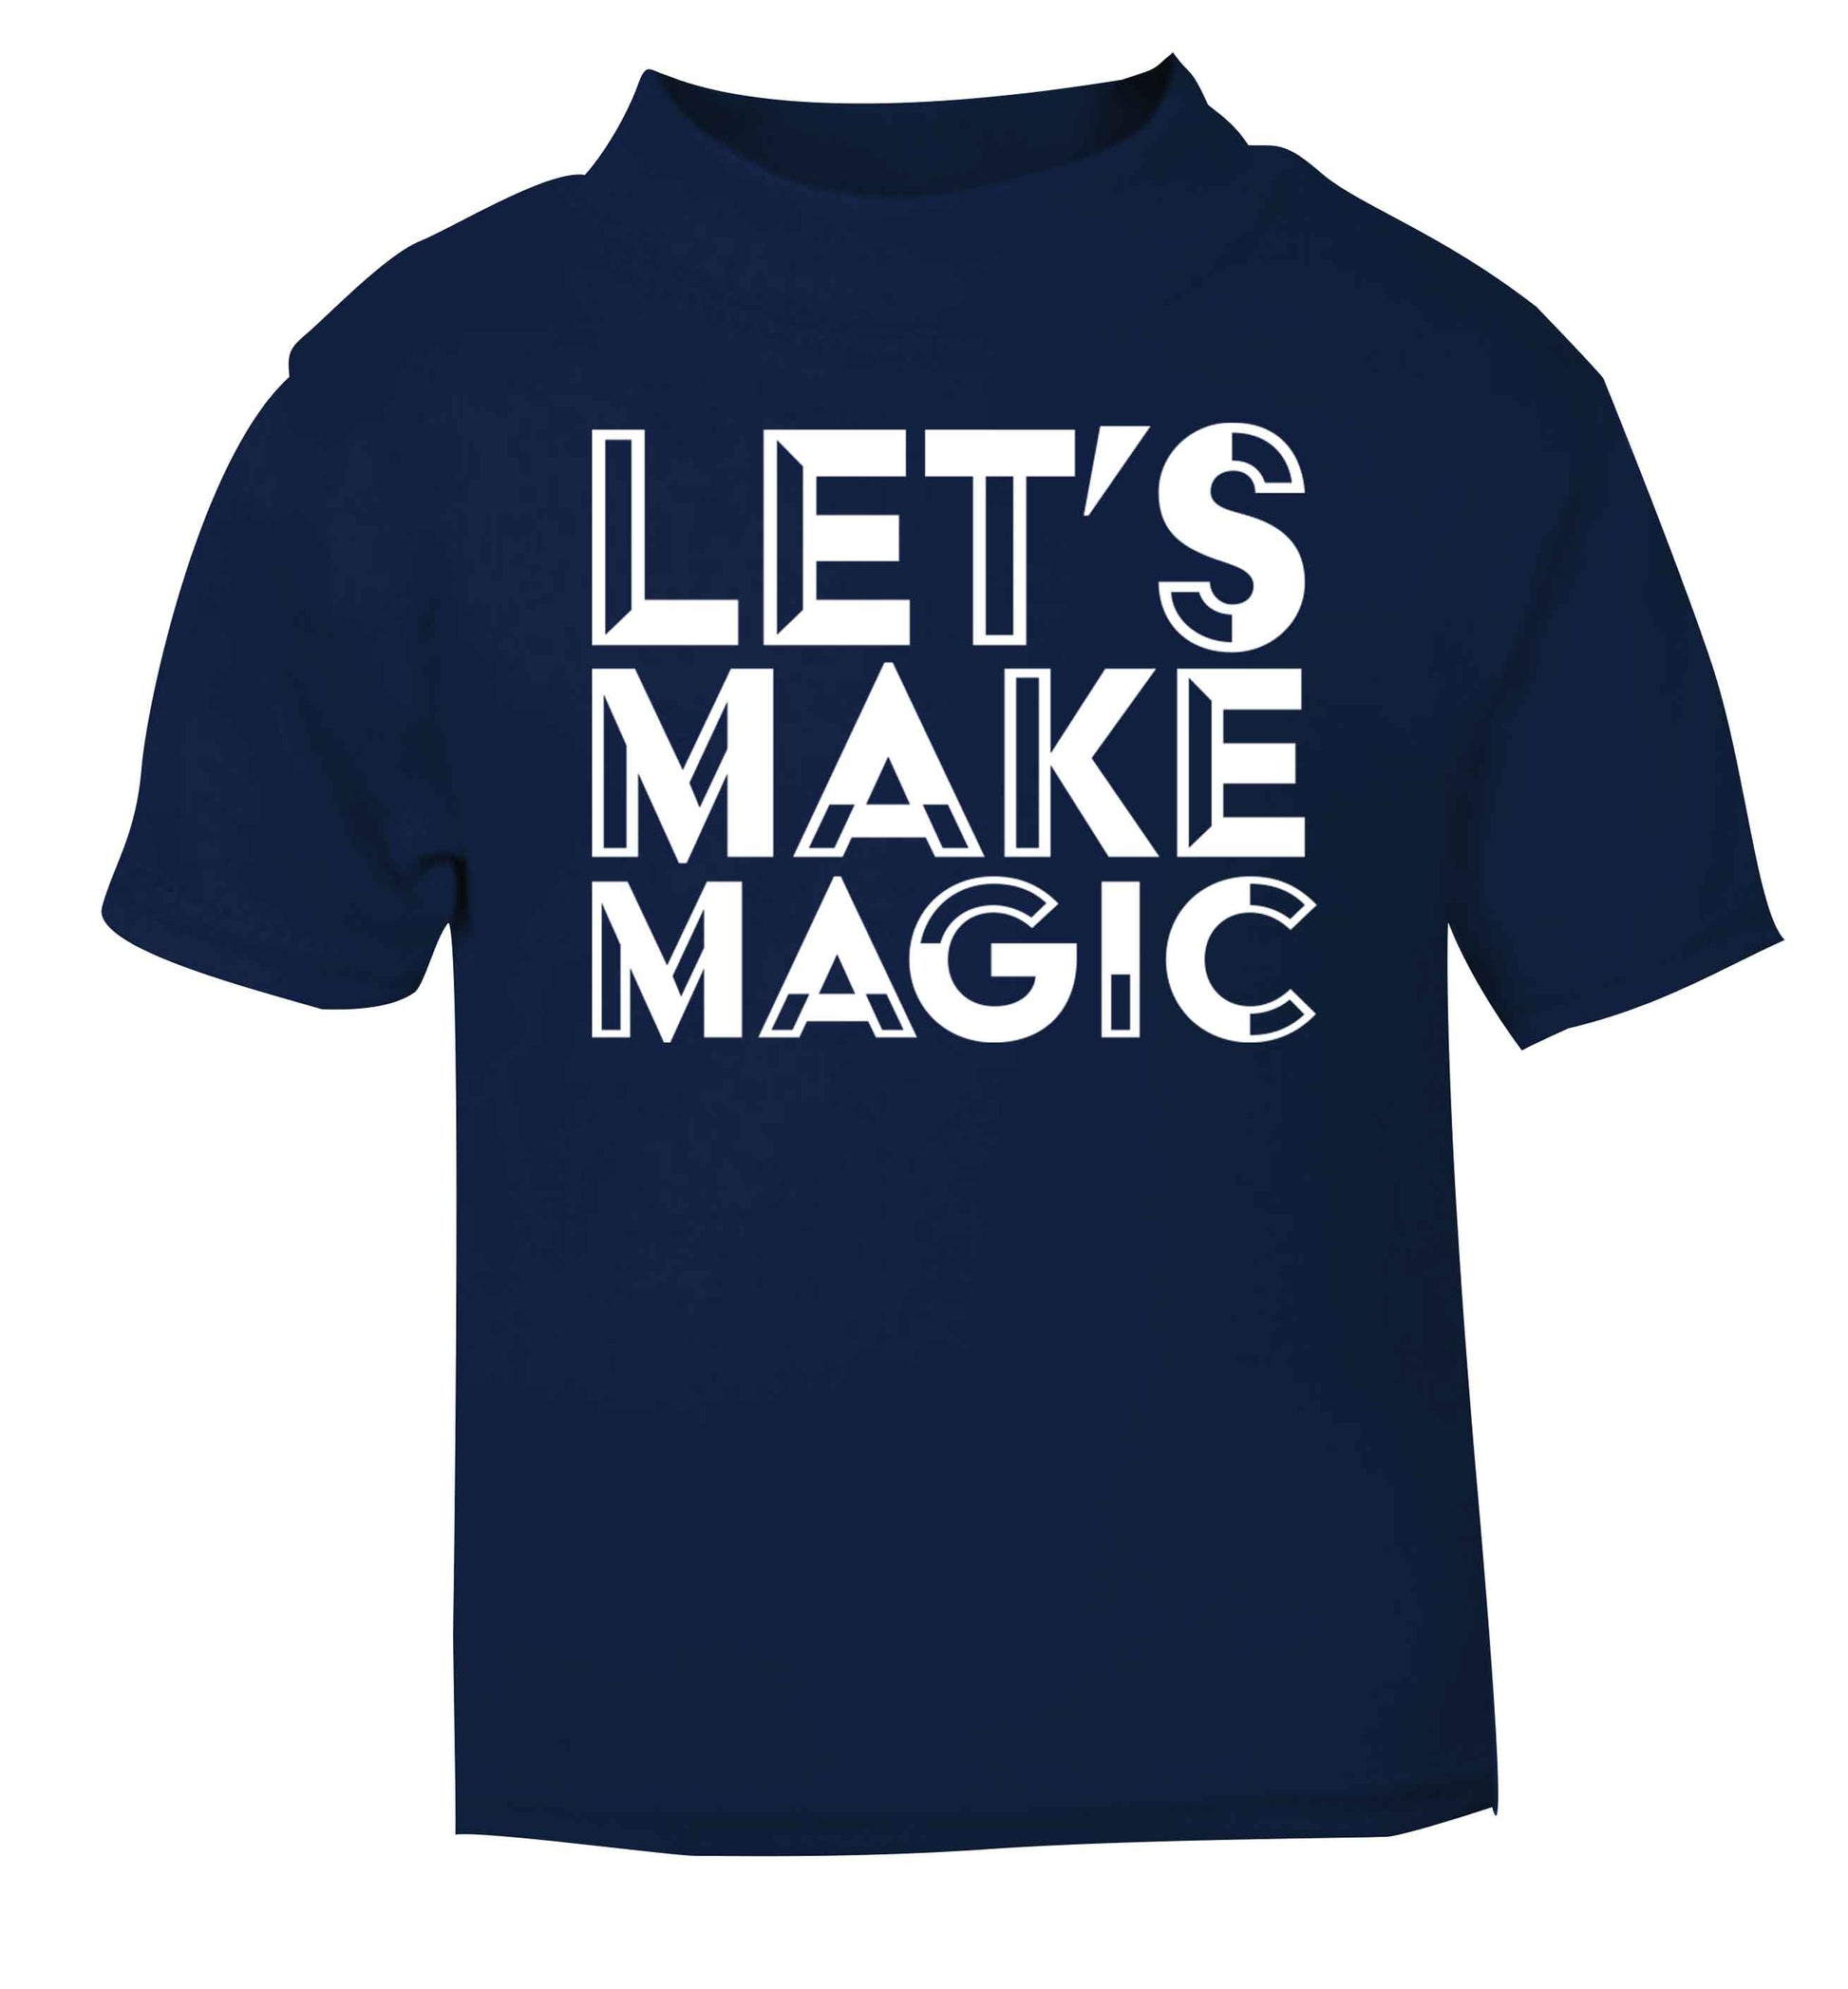 Let's make magic navy baby toddler Tshirt 2 Years